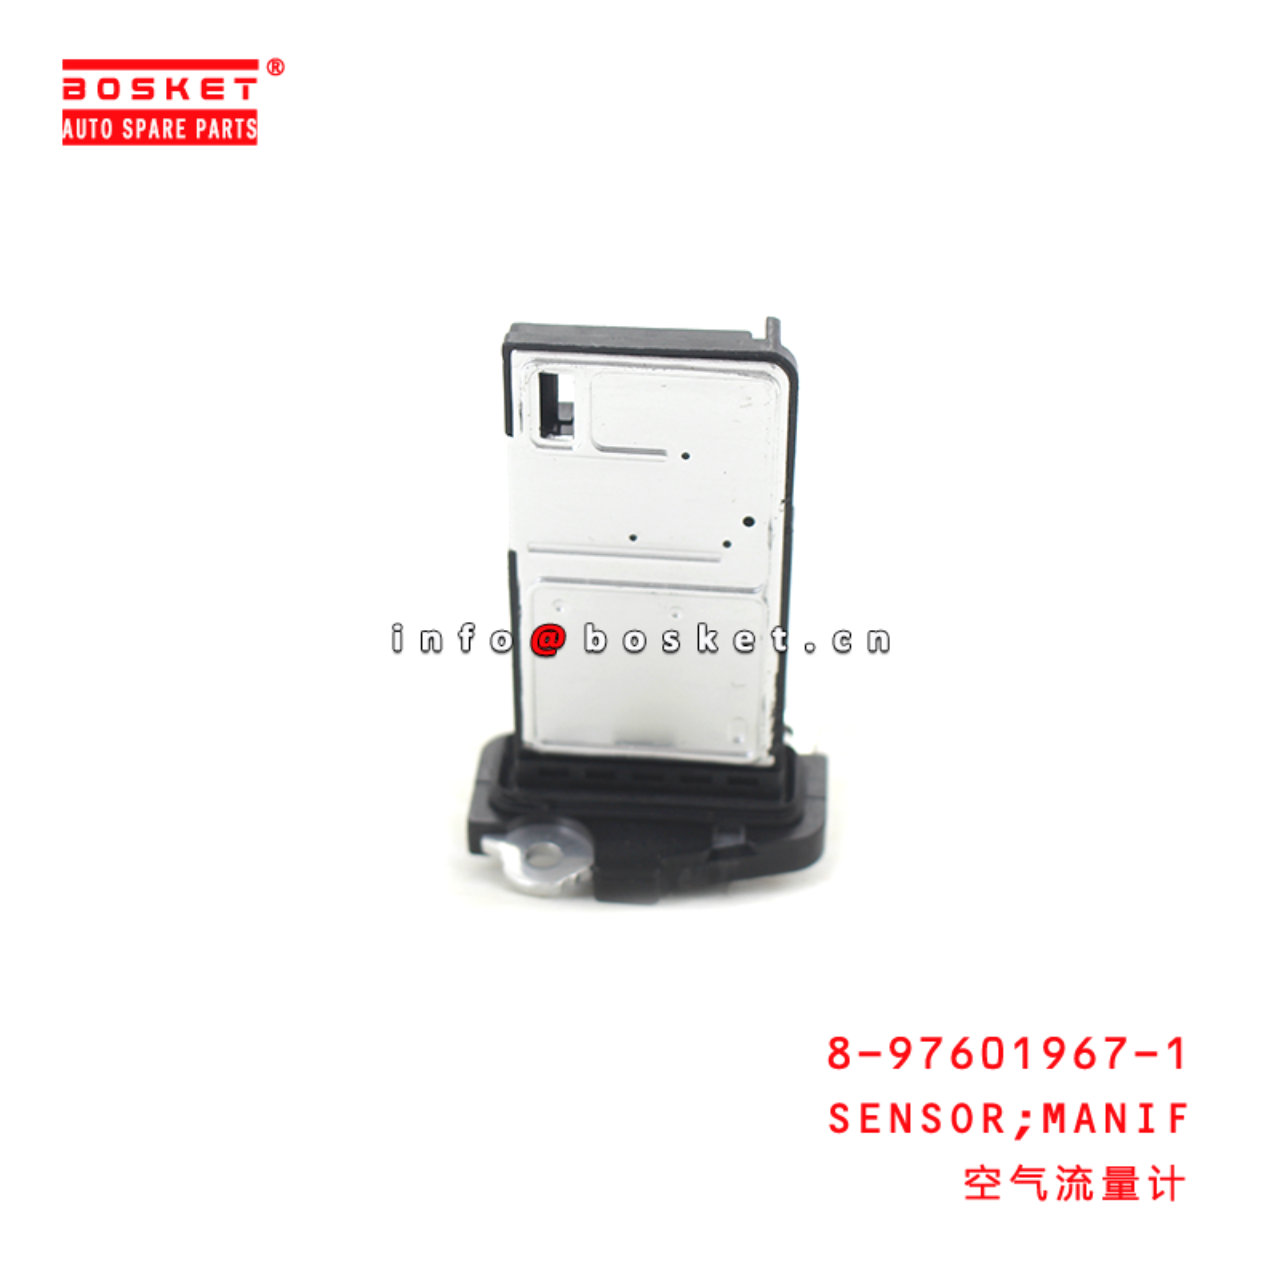 8-97601967-1 Manif Sensor Suitable for ISUZU 4HK1 8976019671